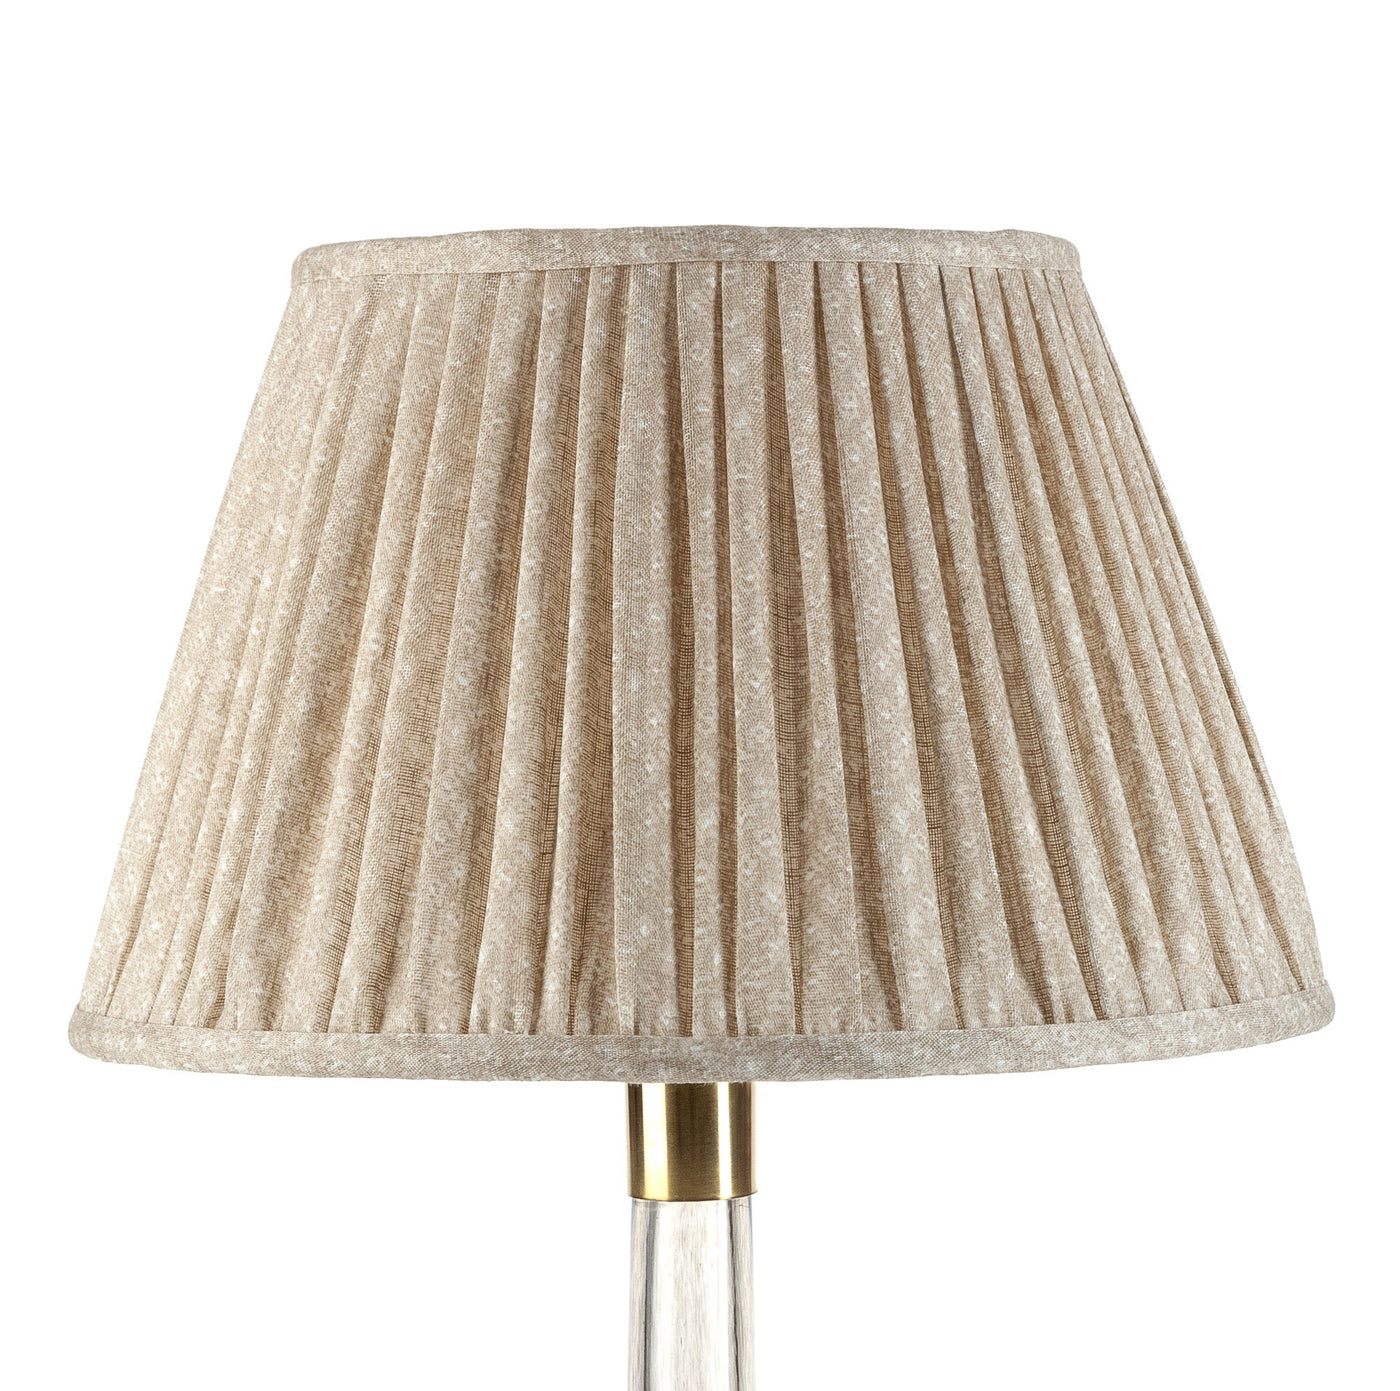 14" Fermoie Lampshade - Figured Linen in Ecru  | Newport Lamp And Shade | Located in Newport, RI